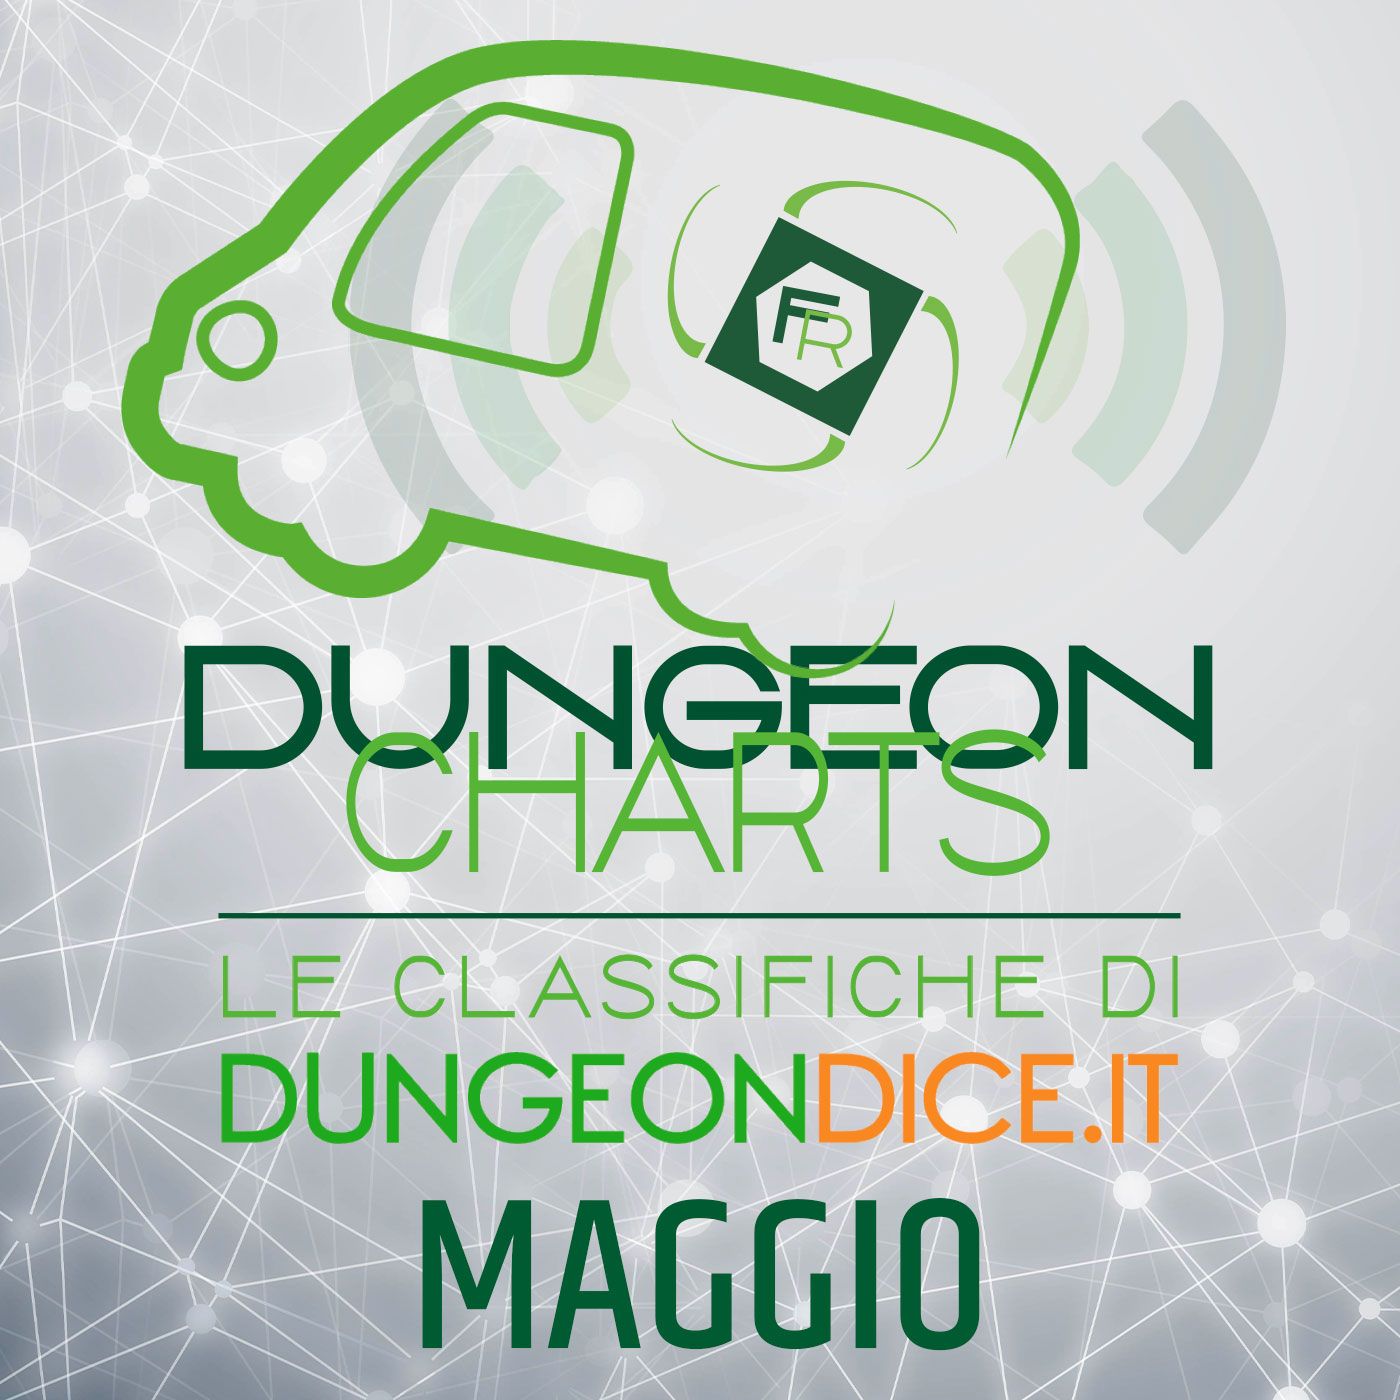 Dungeon Charts - Maggio 2021